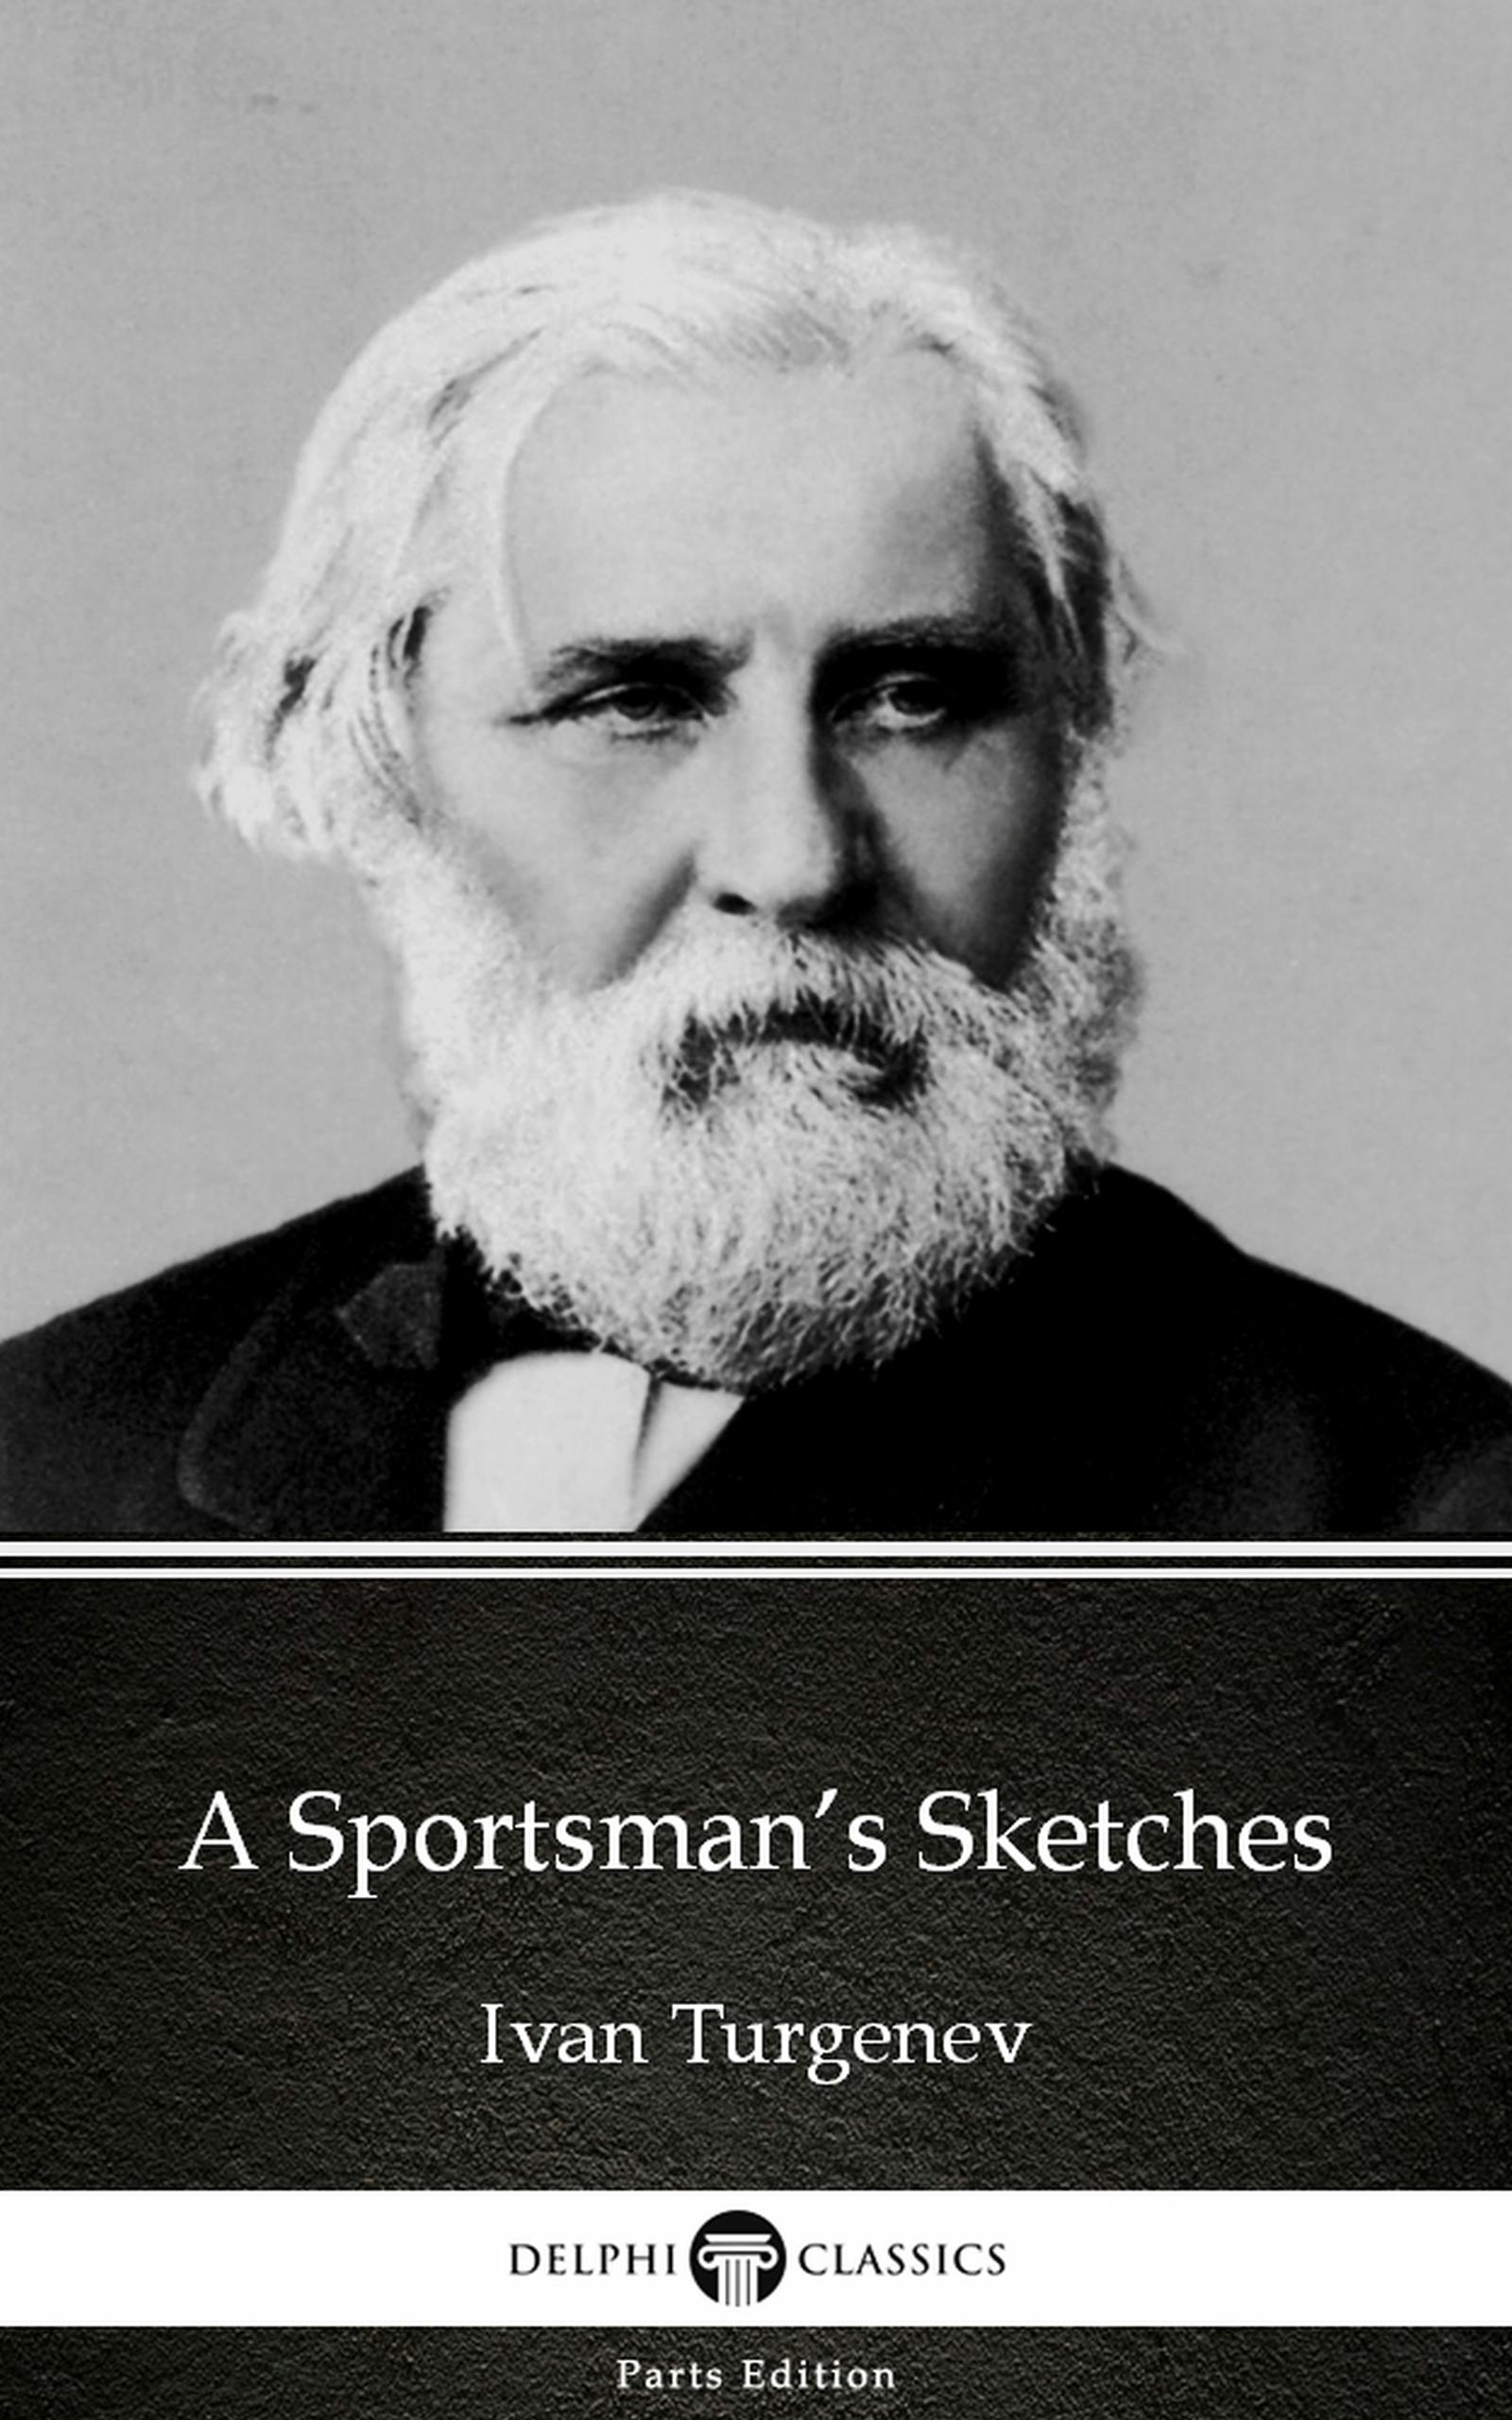 A Sportsman’s Sketches by Ivan Turgenev - Delphi Classics (Illustrated) - Ivan Turgenev